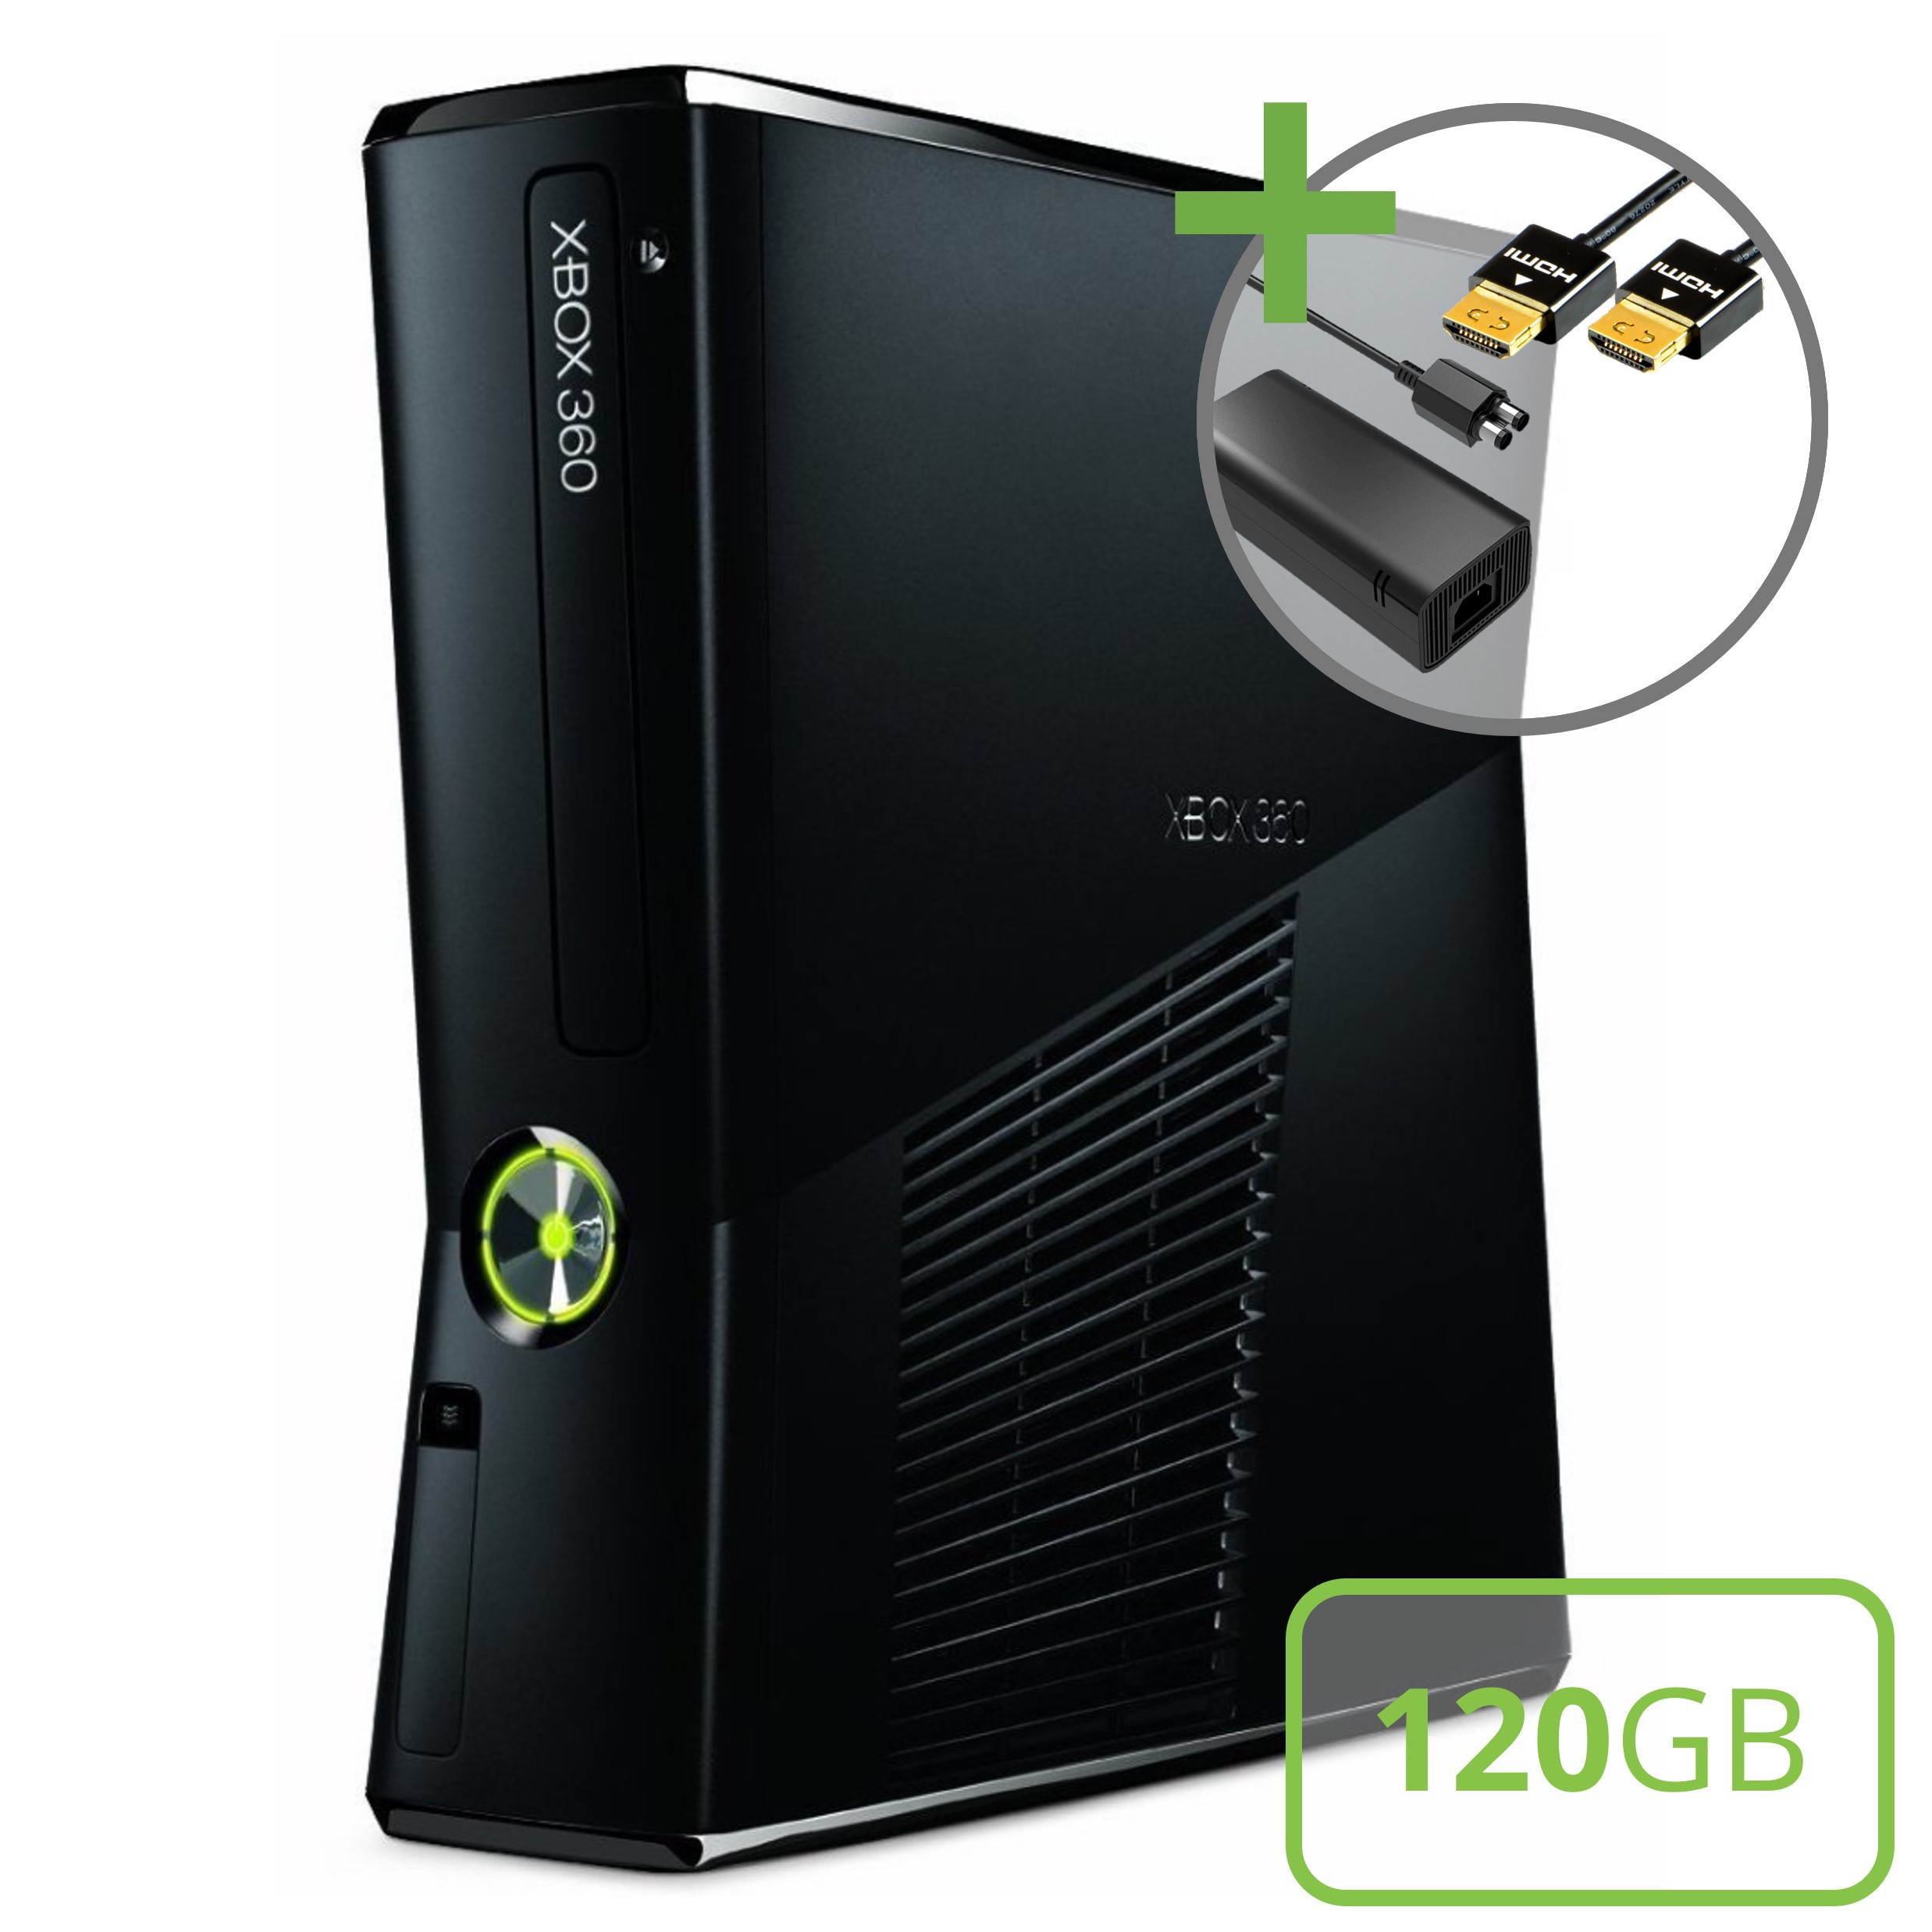 Microsoft Xbox 360 Slim Console (120GB) - Xbox 360 Hardware